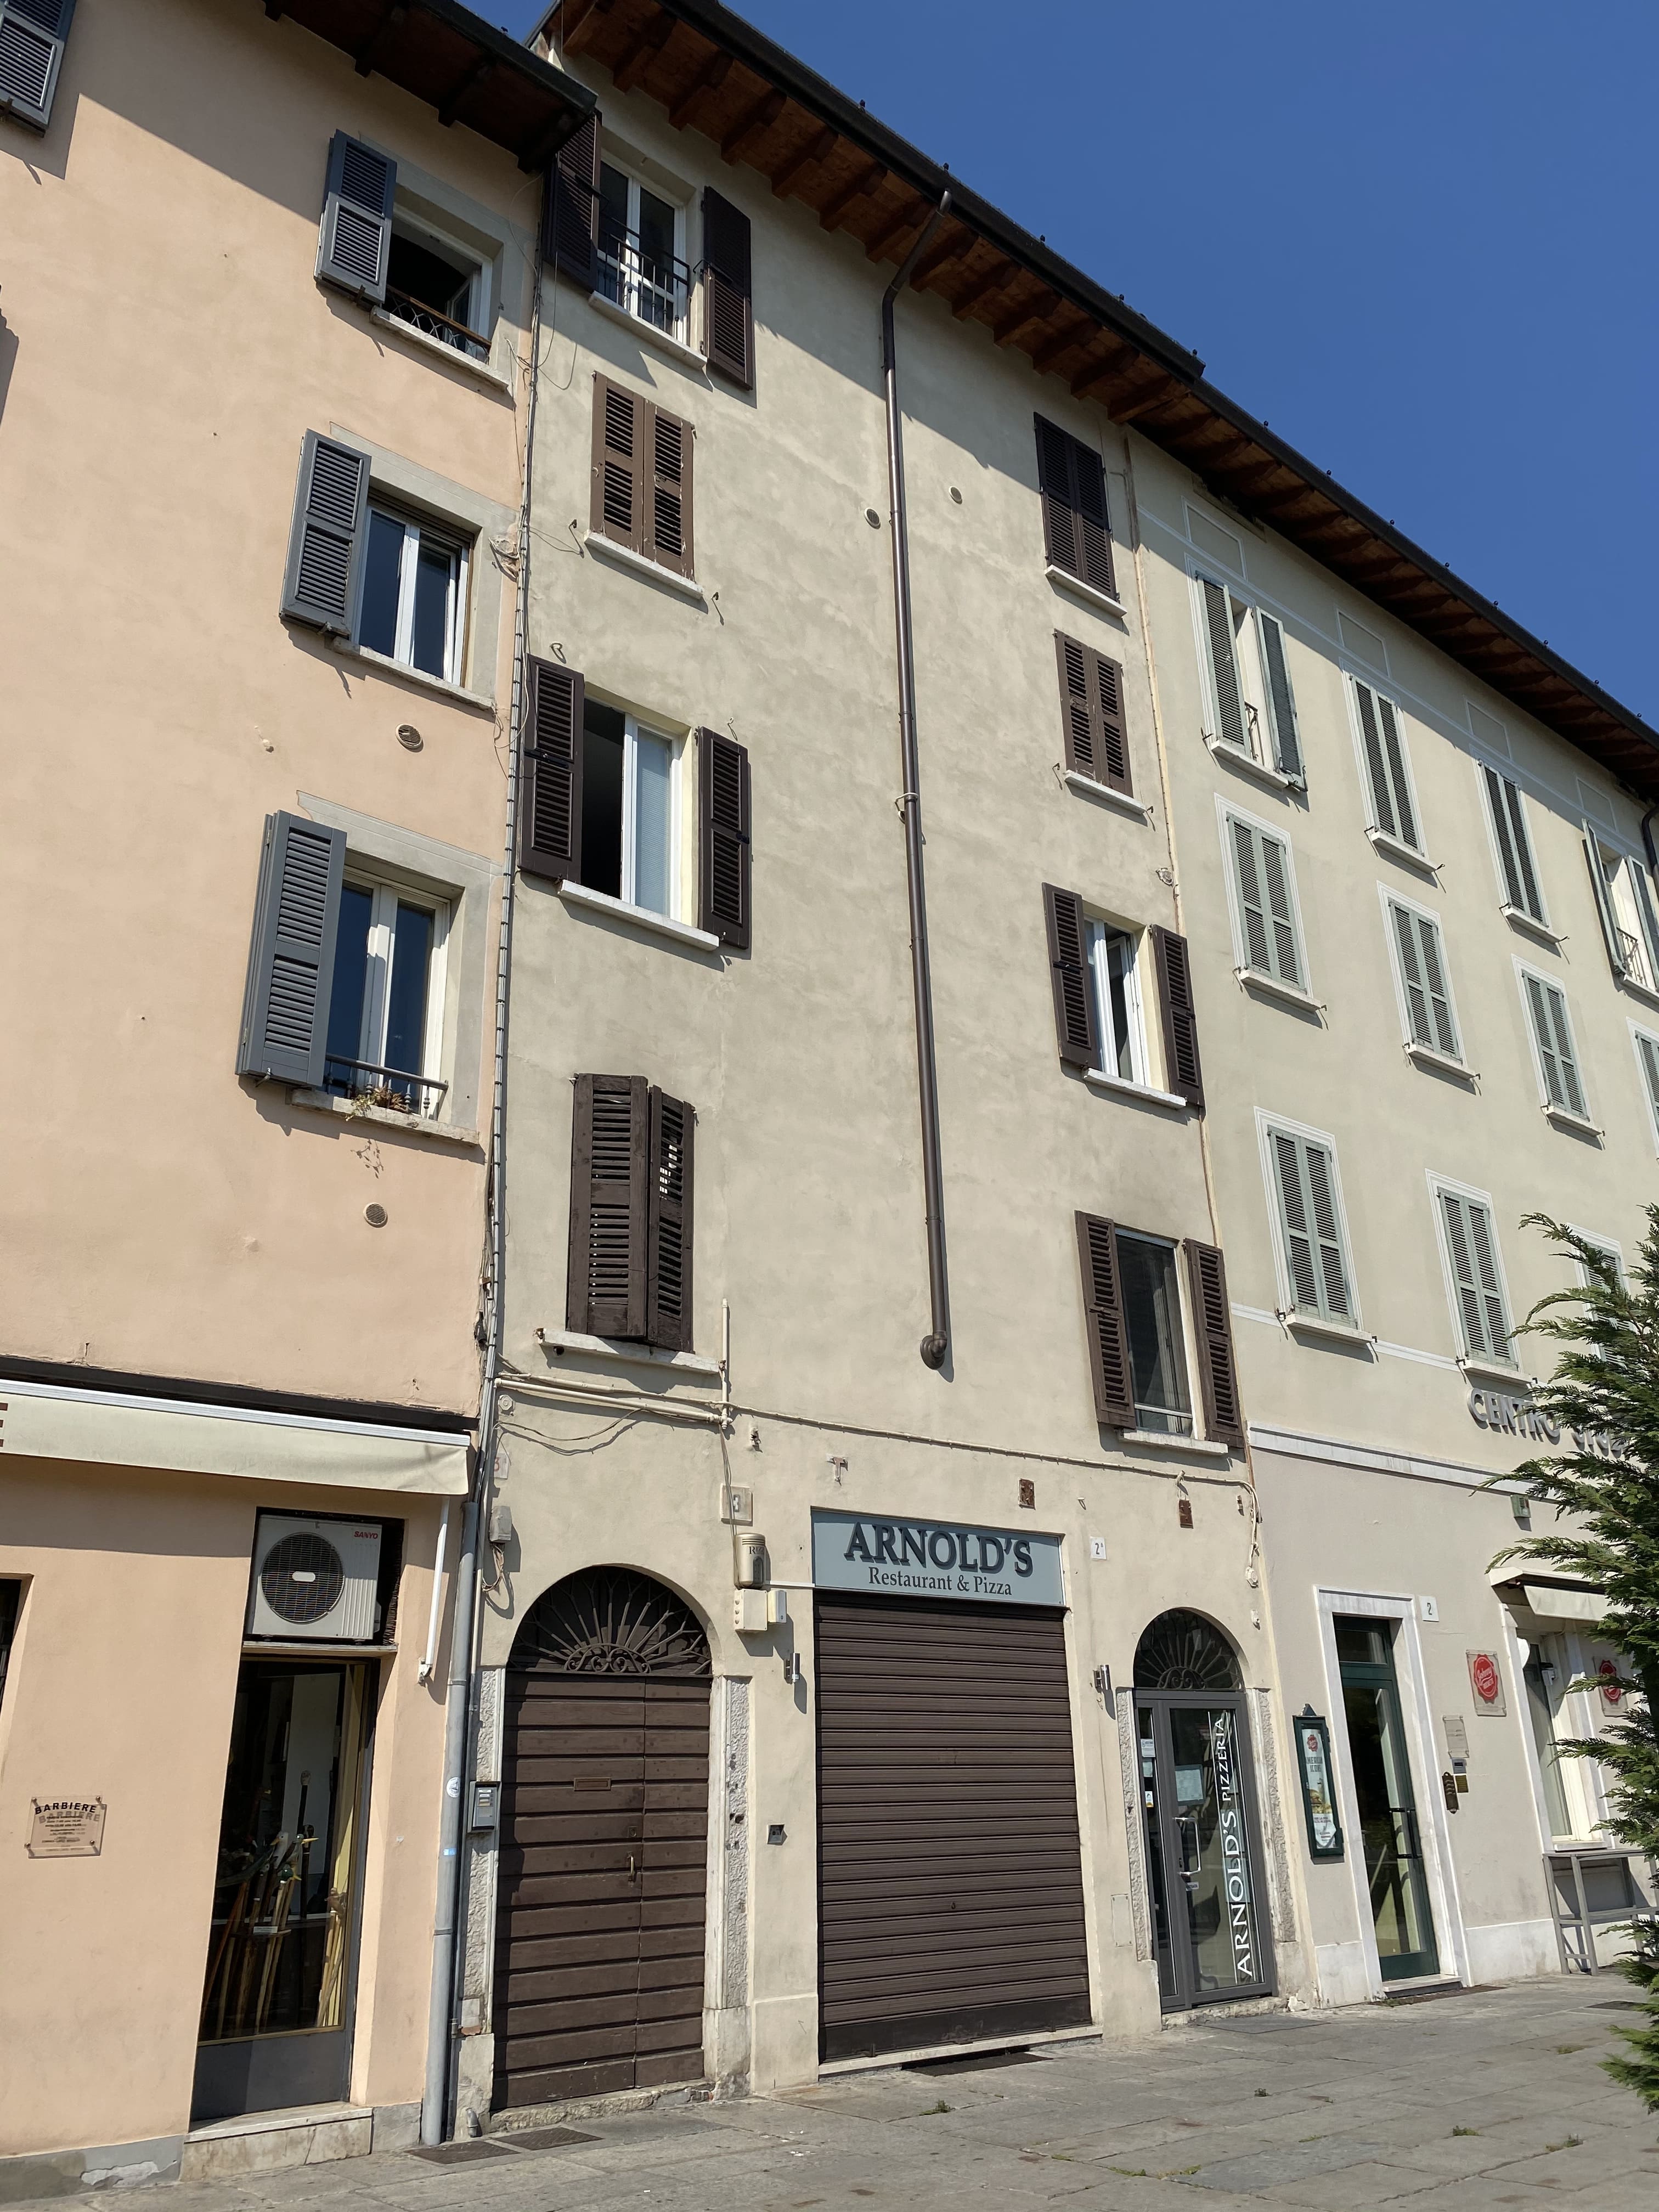 Casa in Piazzale Arnaldo, 2/A (casa, in linea) - Brescia (BS)  (N.R)